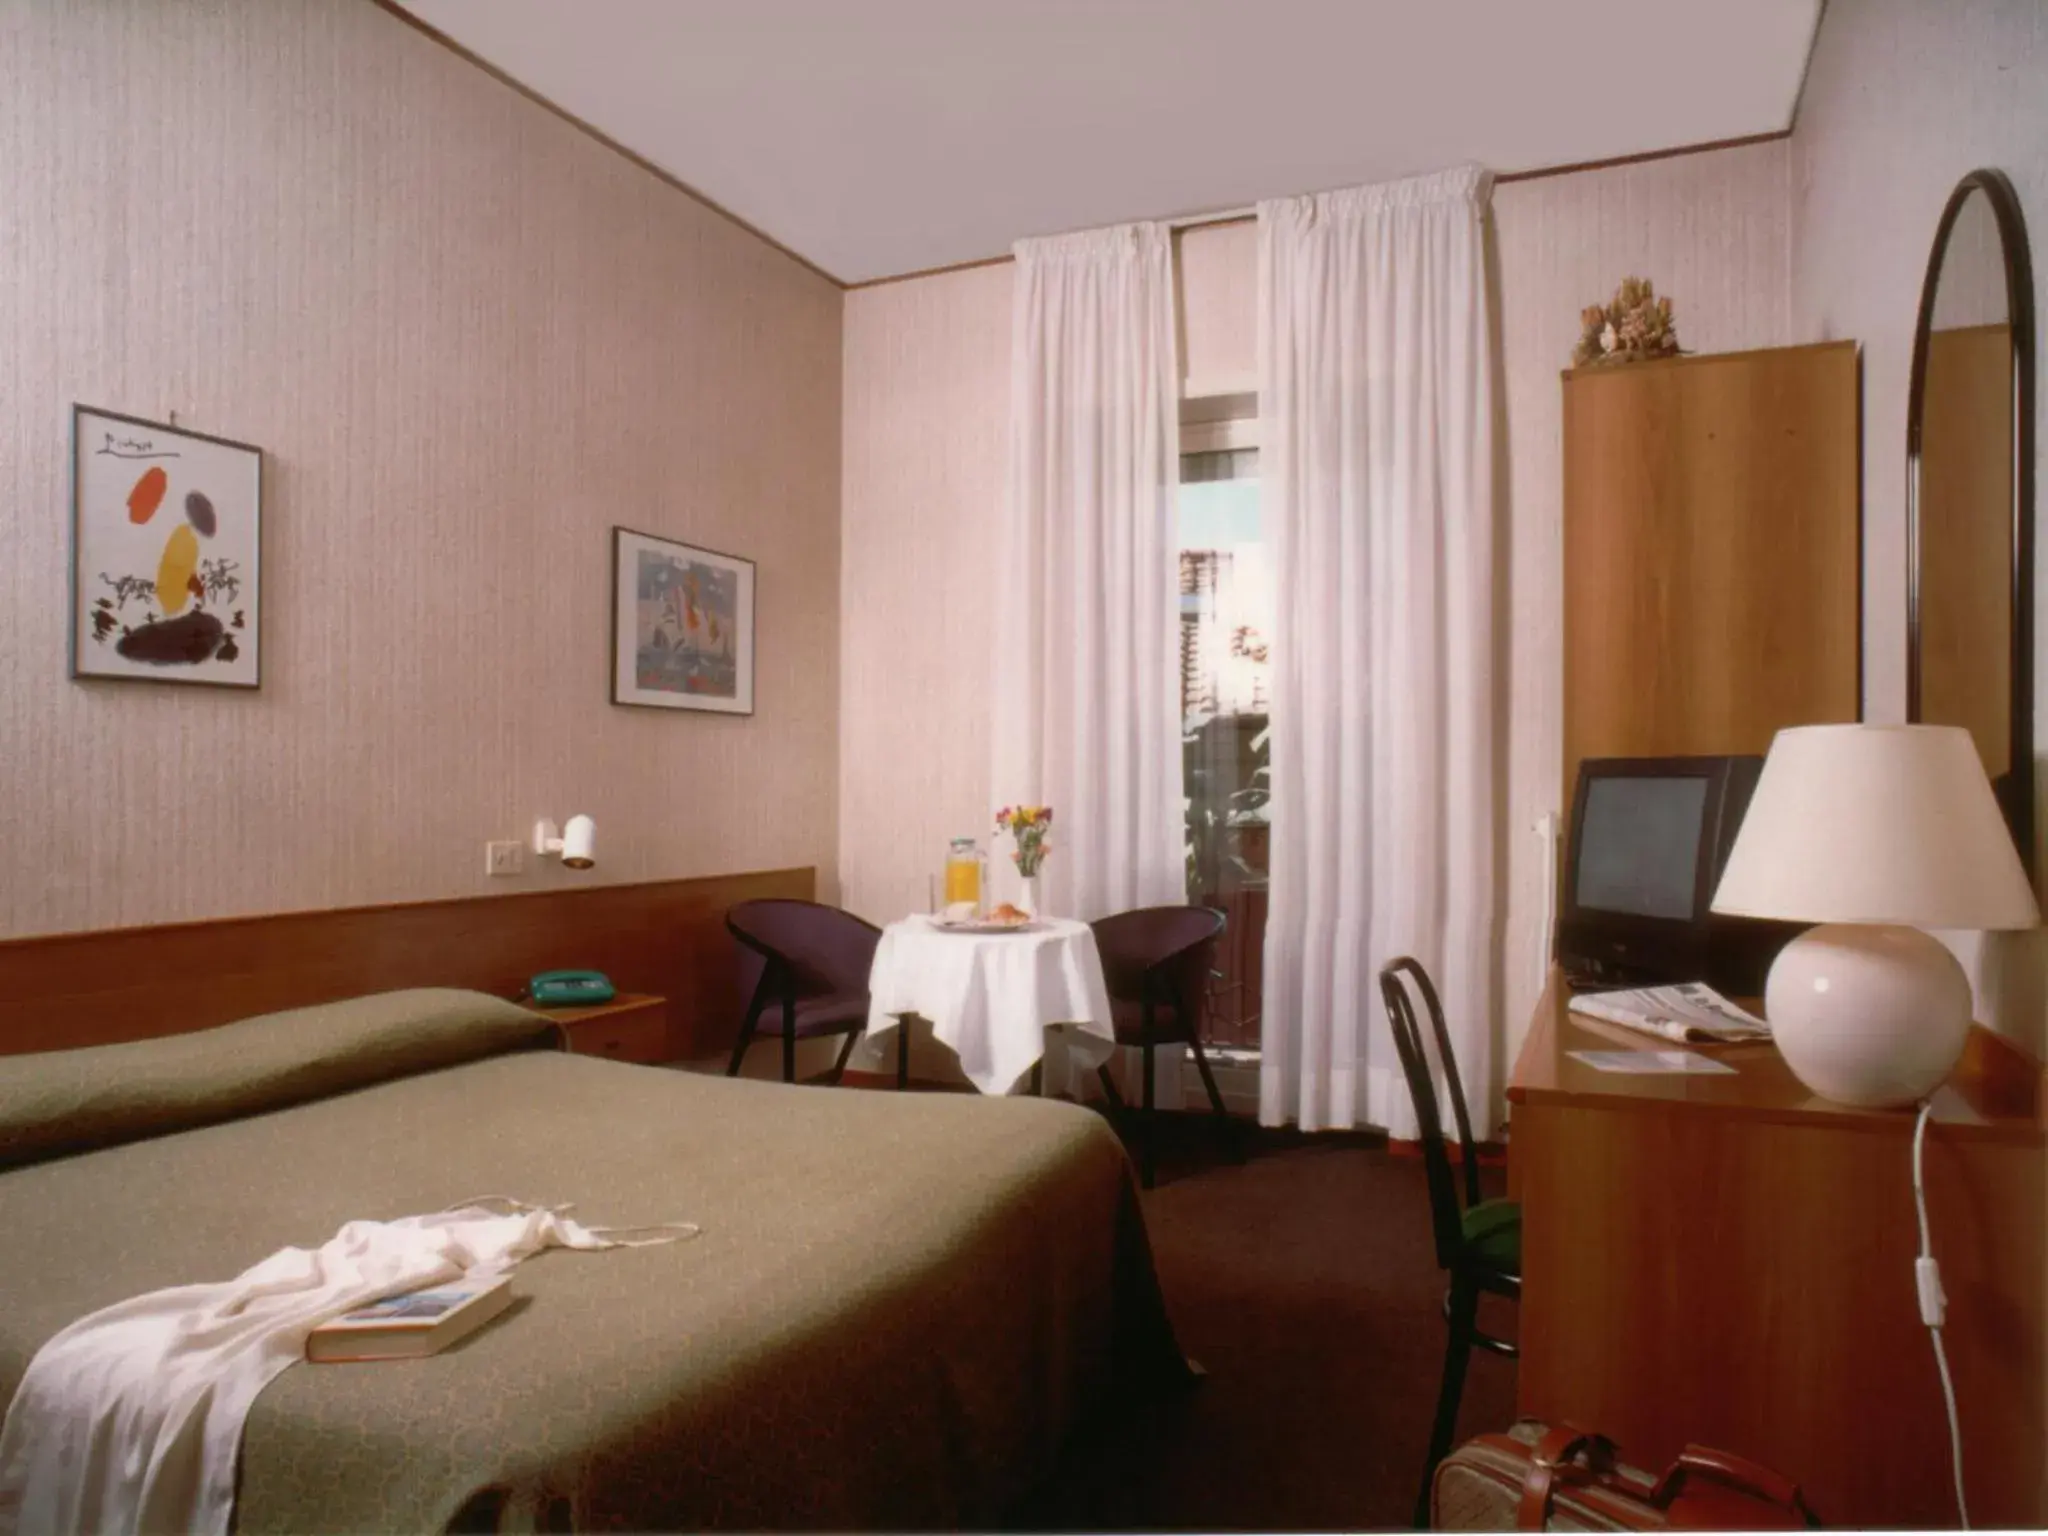 Photo of the whole room in Tuscia Hotel